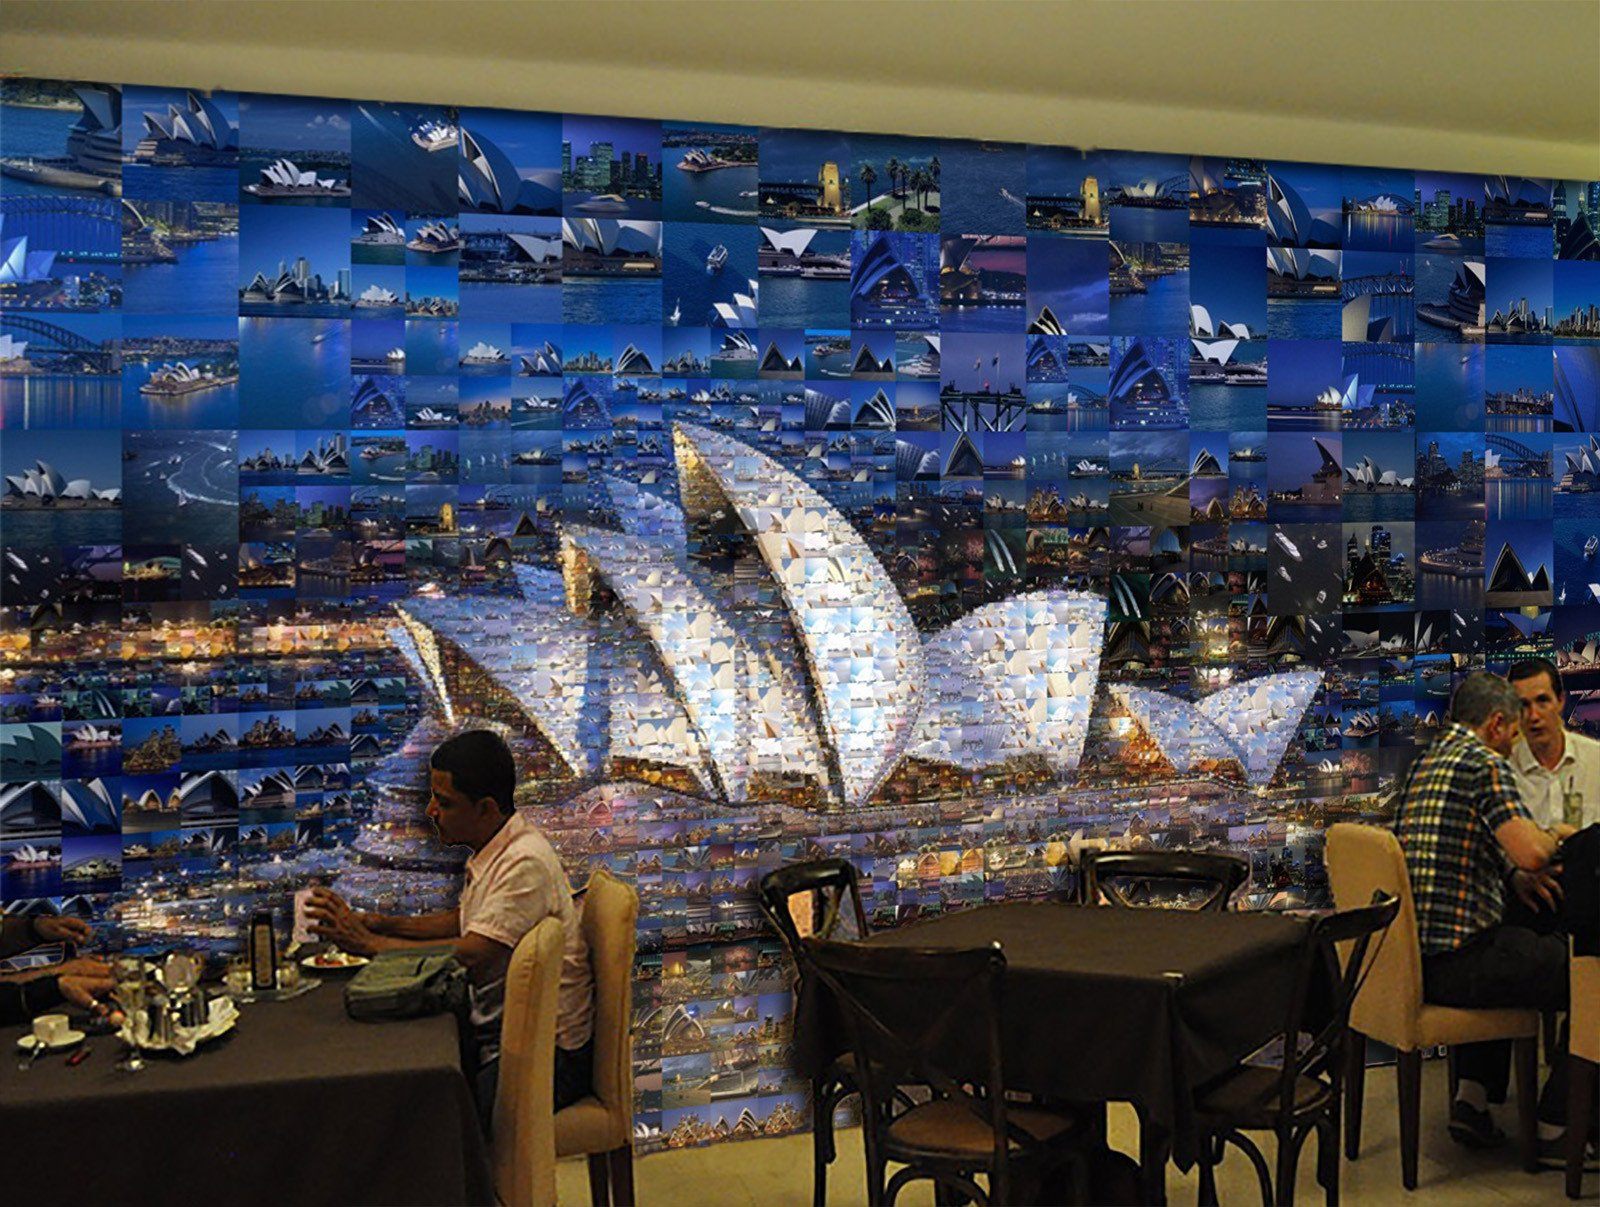 3D Sydney Opera House Wallpaper AJ Wallpapers 